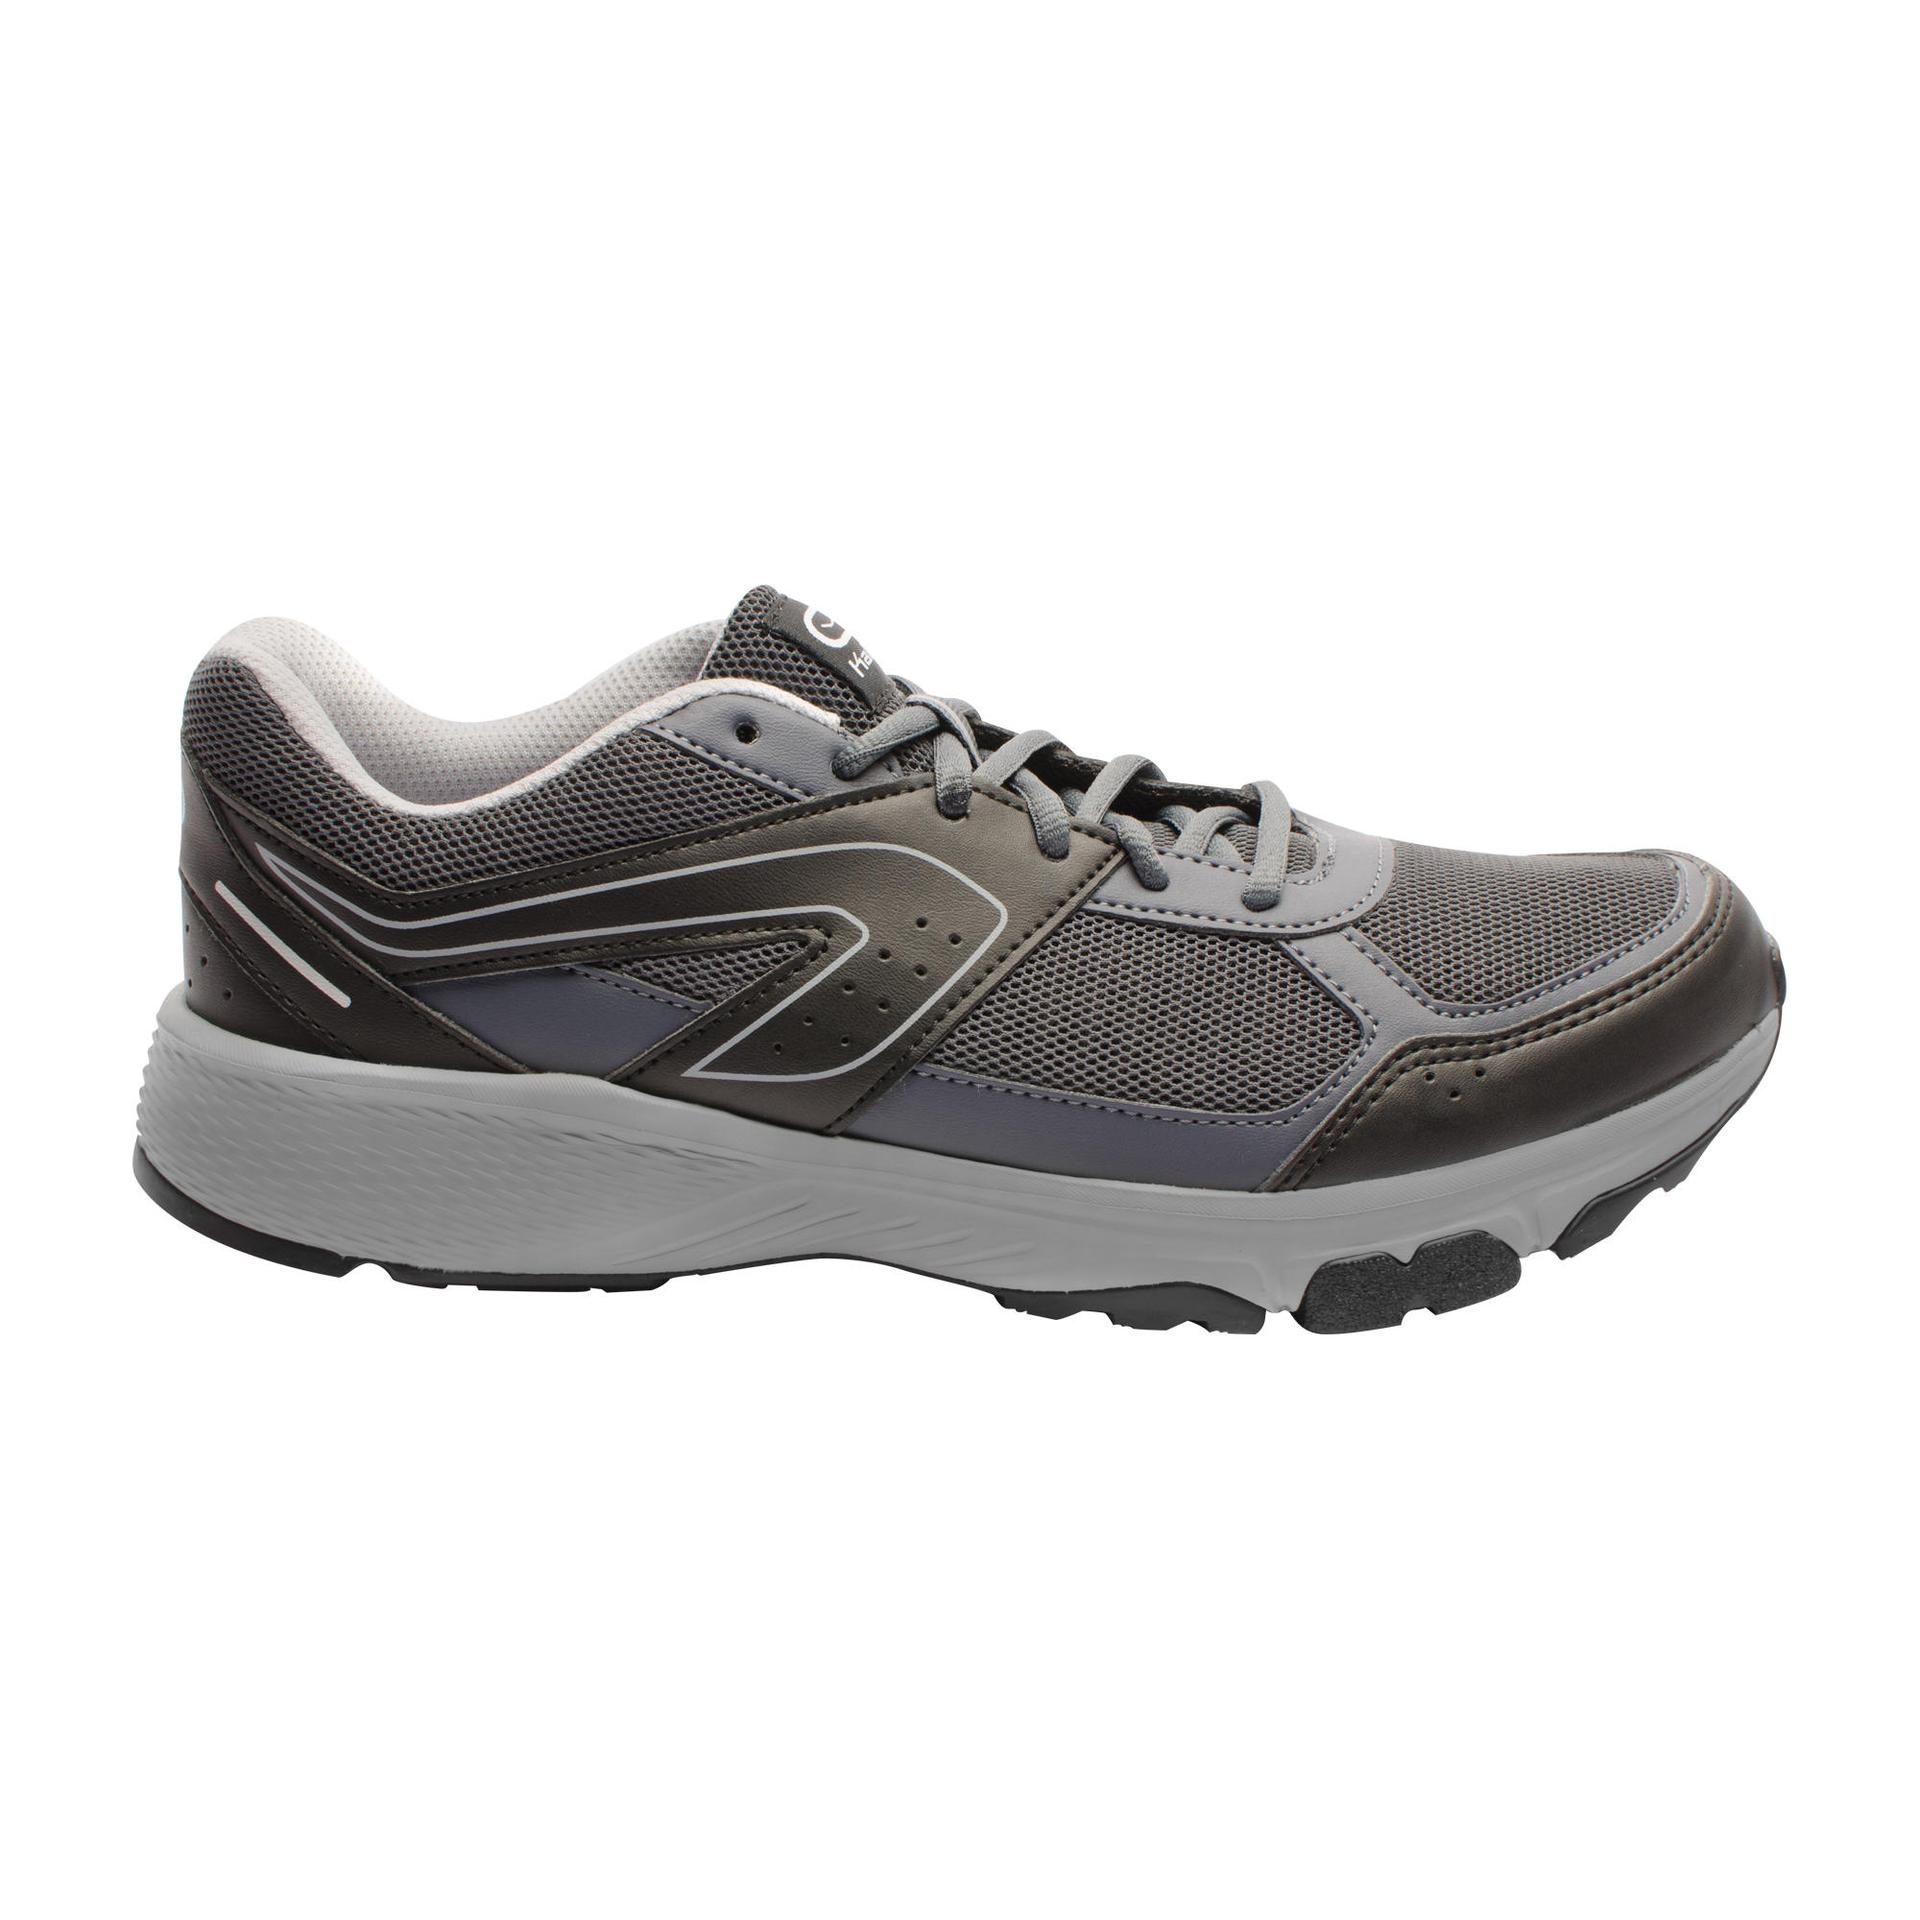 men's running shoe run cushion grip - grey/black